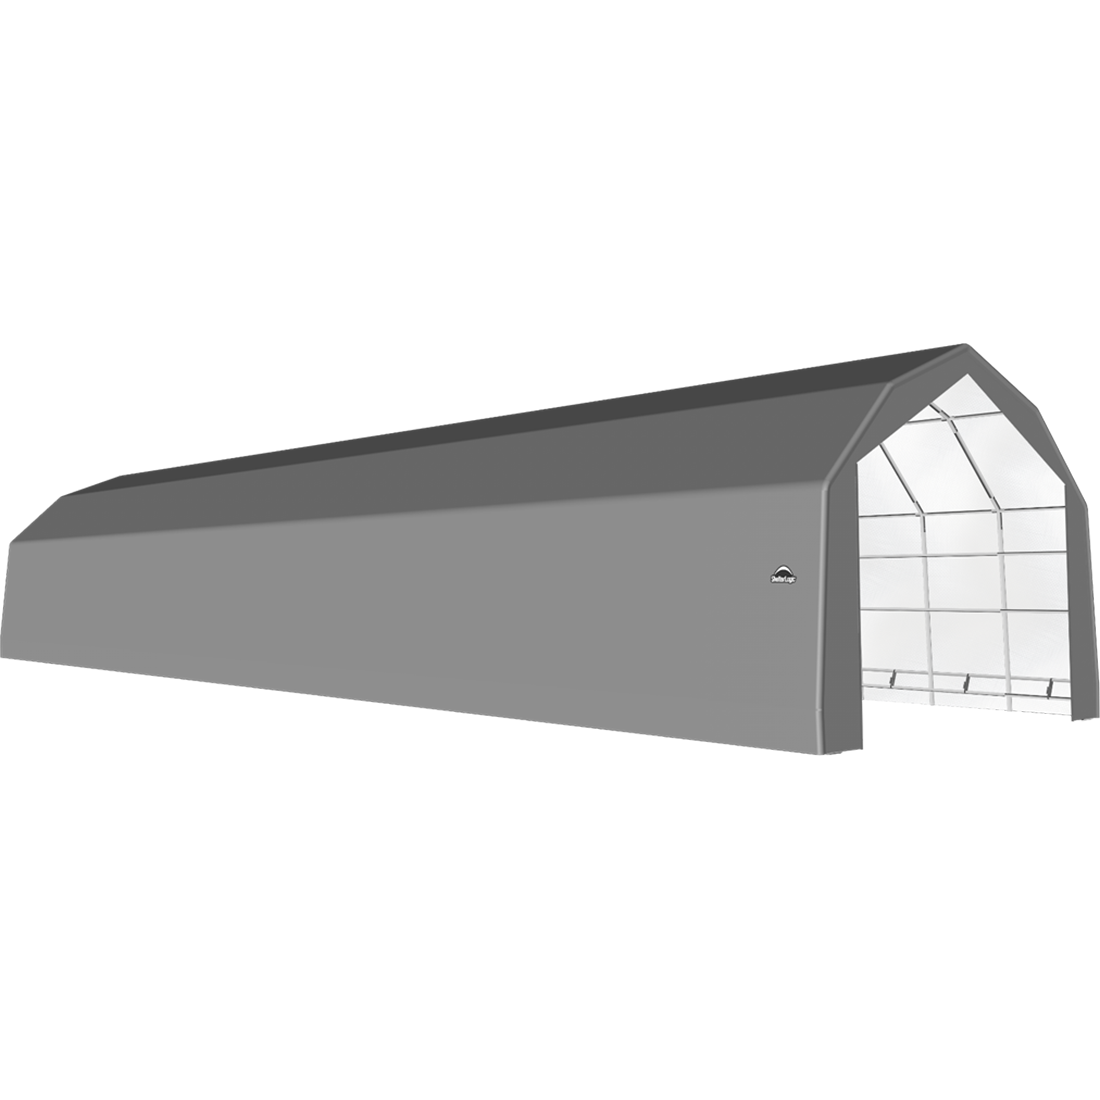 ShelterTech SP Series Barn Shelter, 20 ft. x 84 ft. x 15 ft. Heavy Duty PVC 14.5 oz. Gray